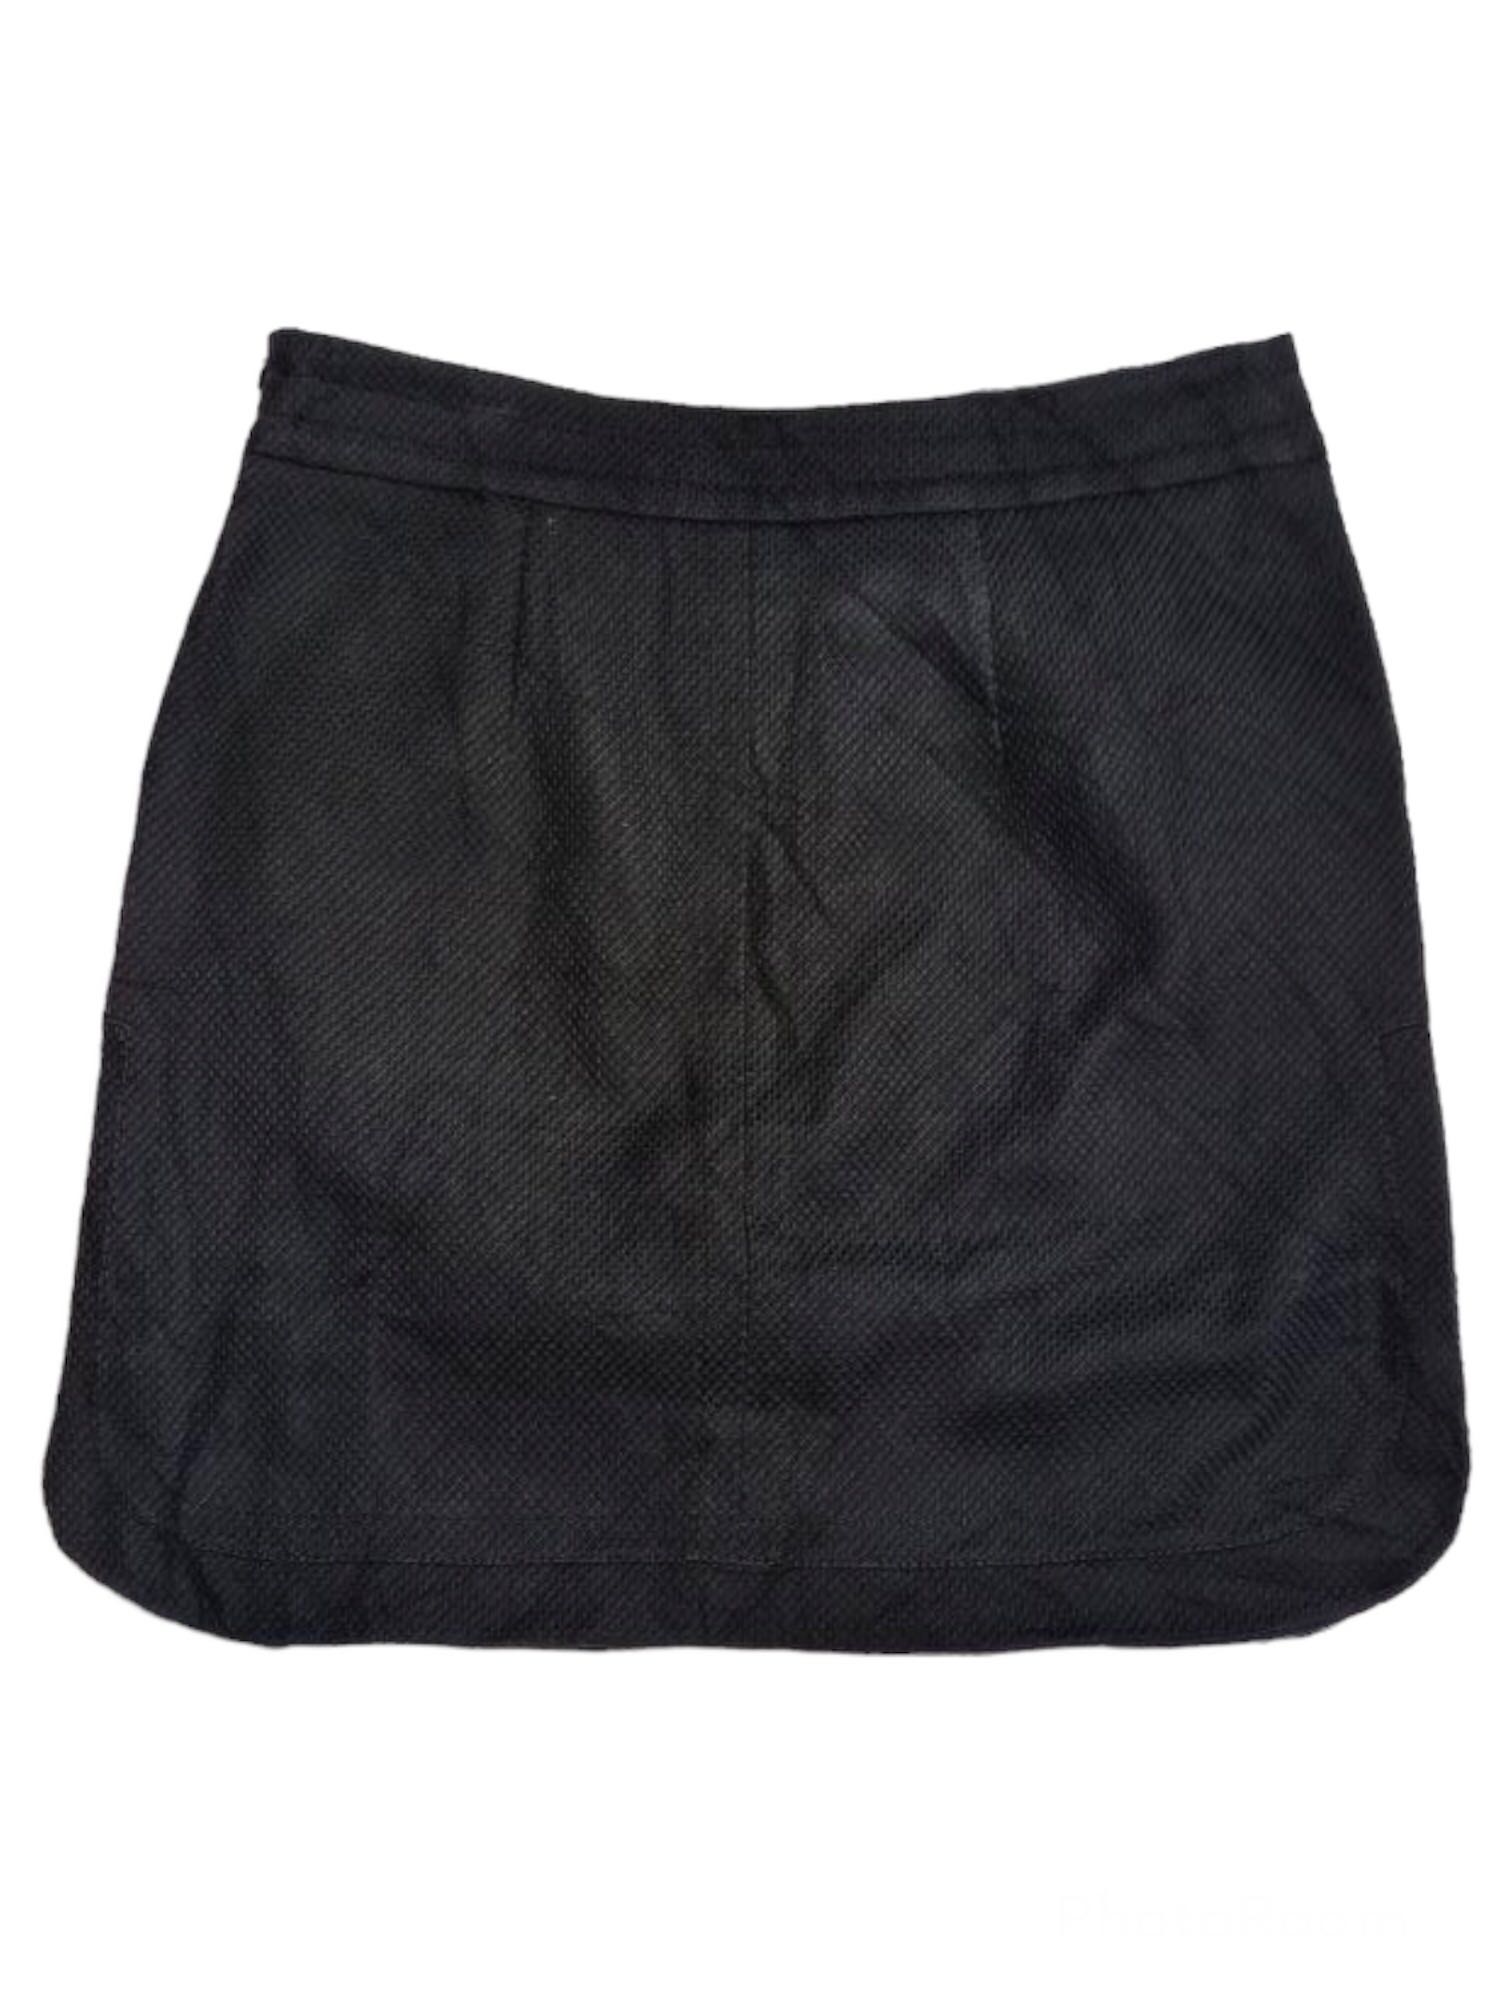 Kenzo Cotton Mini Skirt Made in Slovakia Size 38 - 2